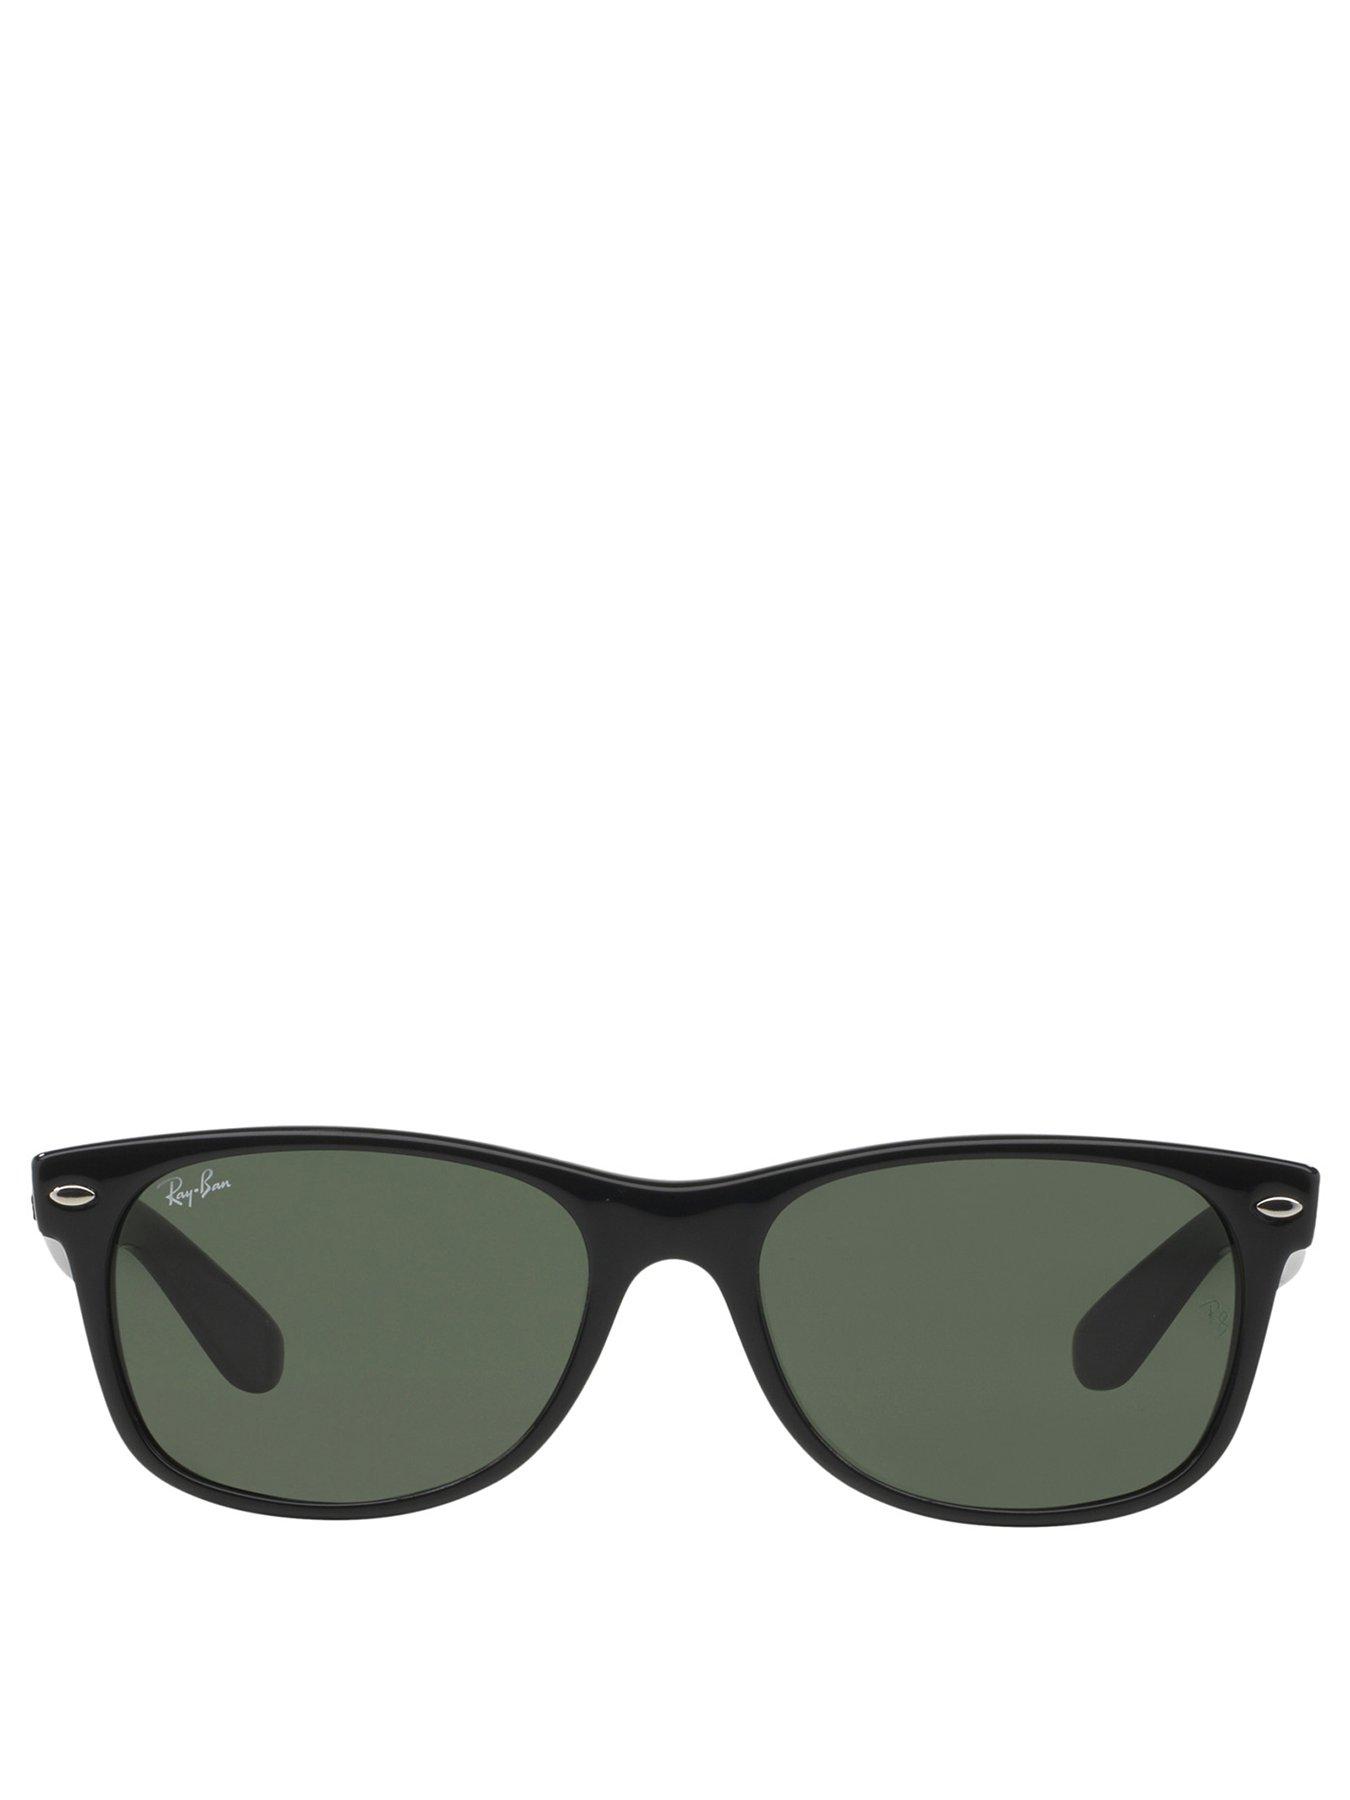 Ray-Ban New Wayfarer Sunglasses - Black 